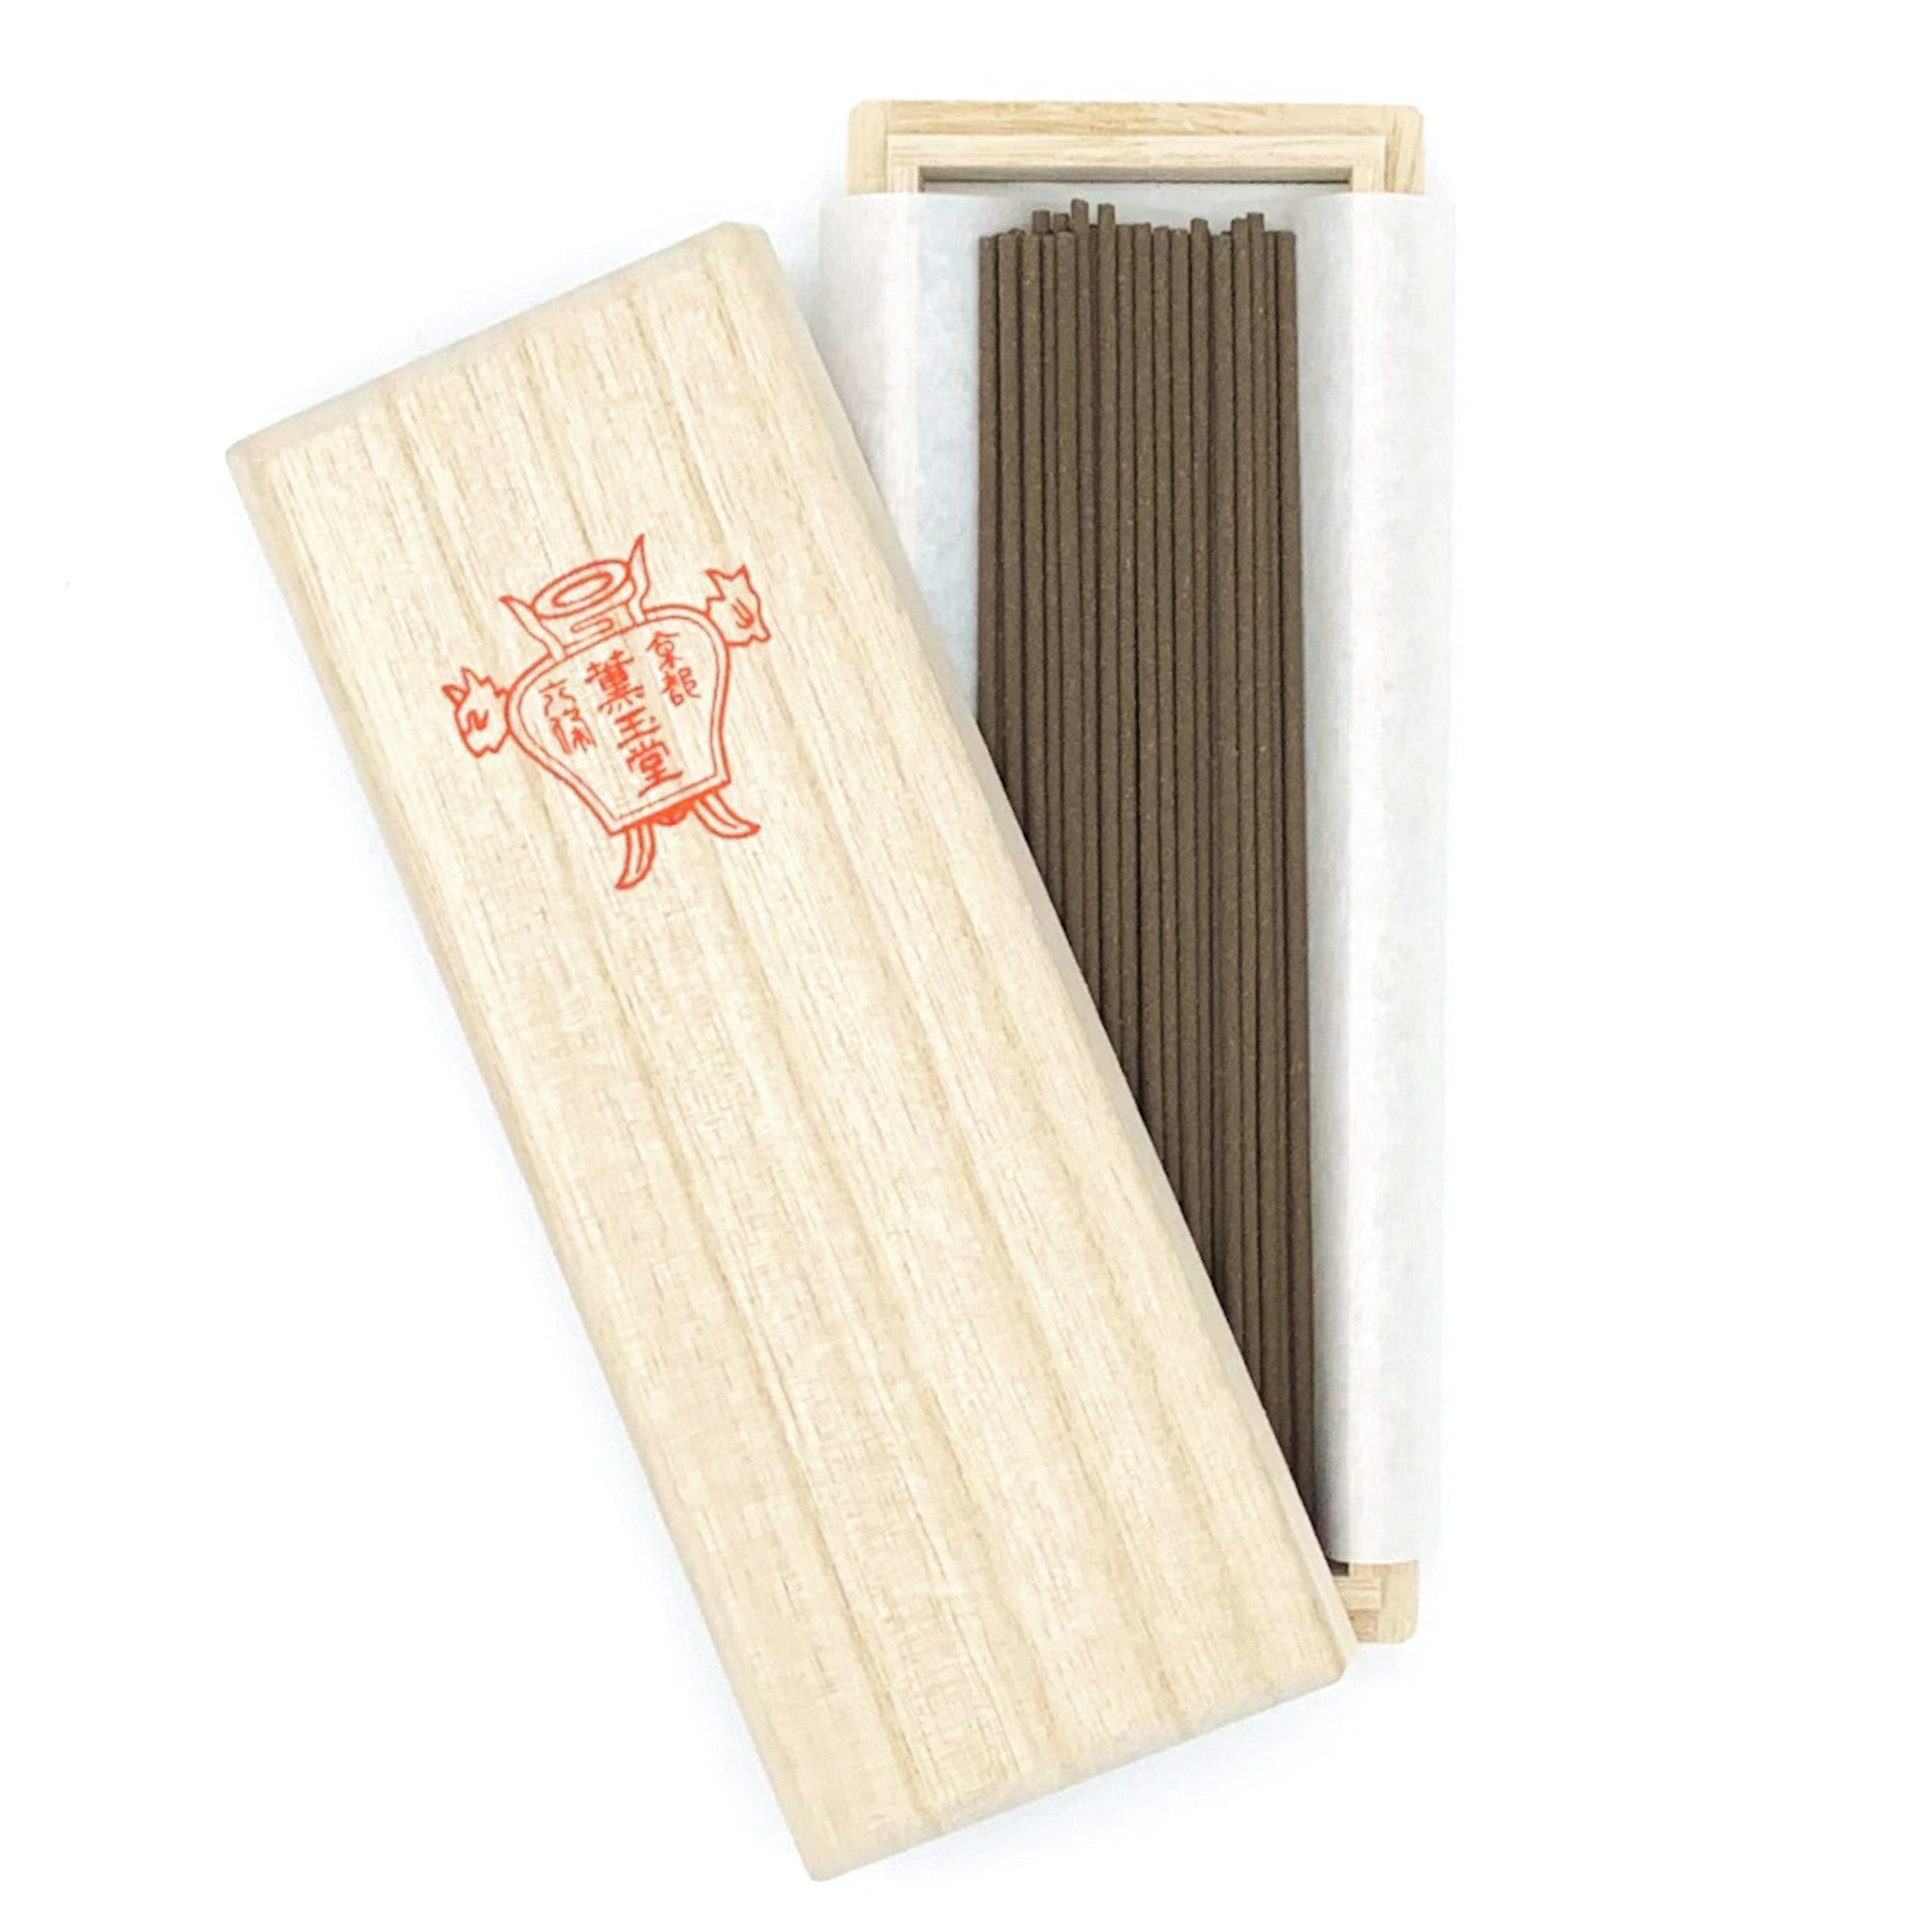 Kungyokudo Incense Sticks in Pawlonia Wooden Box - Agarwood